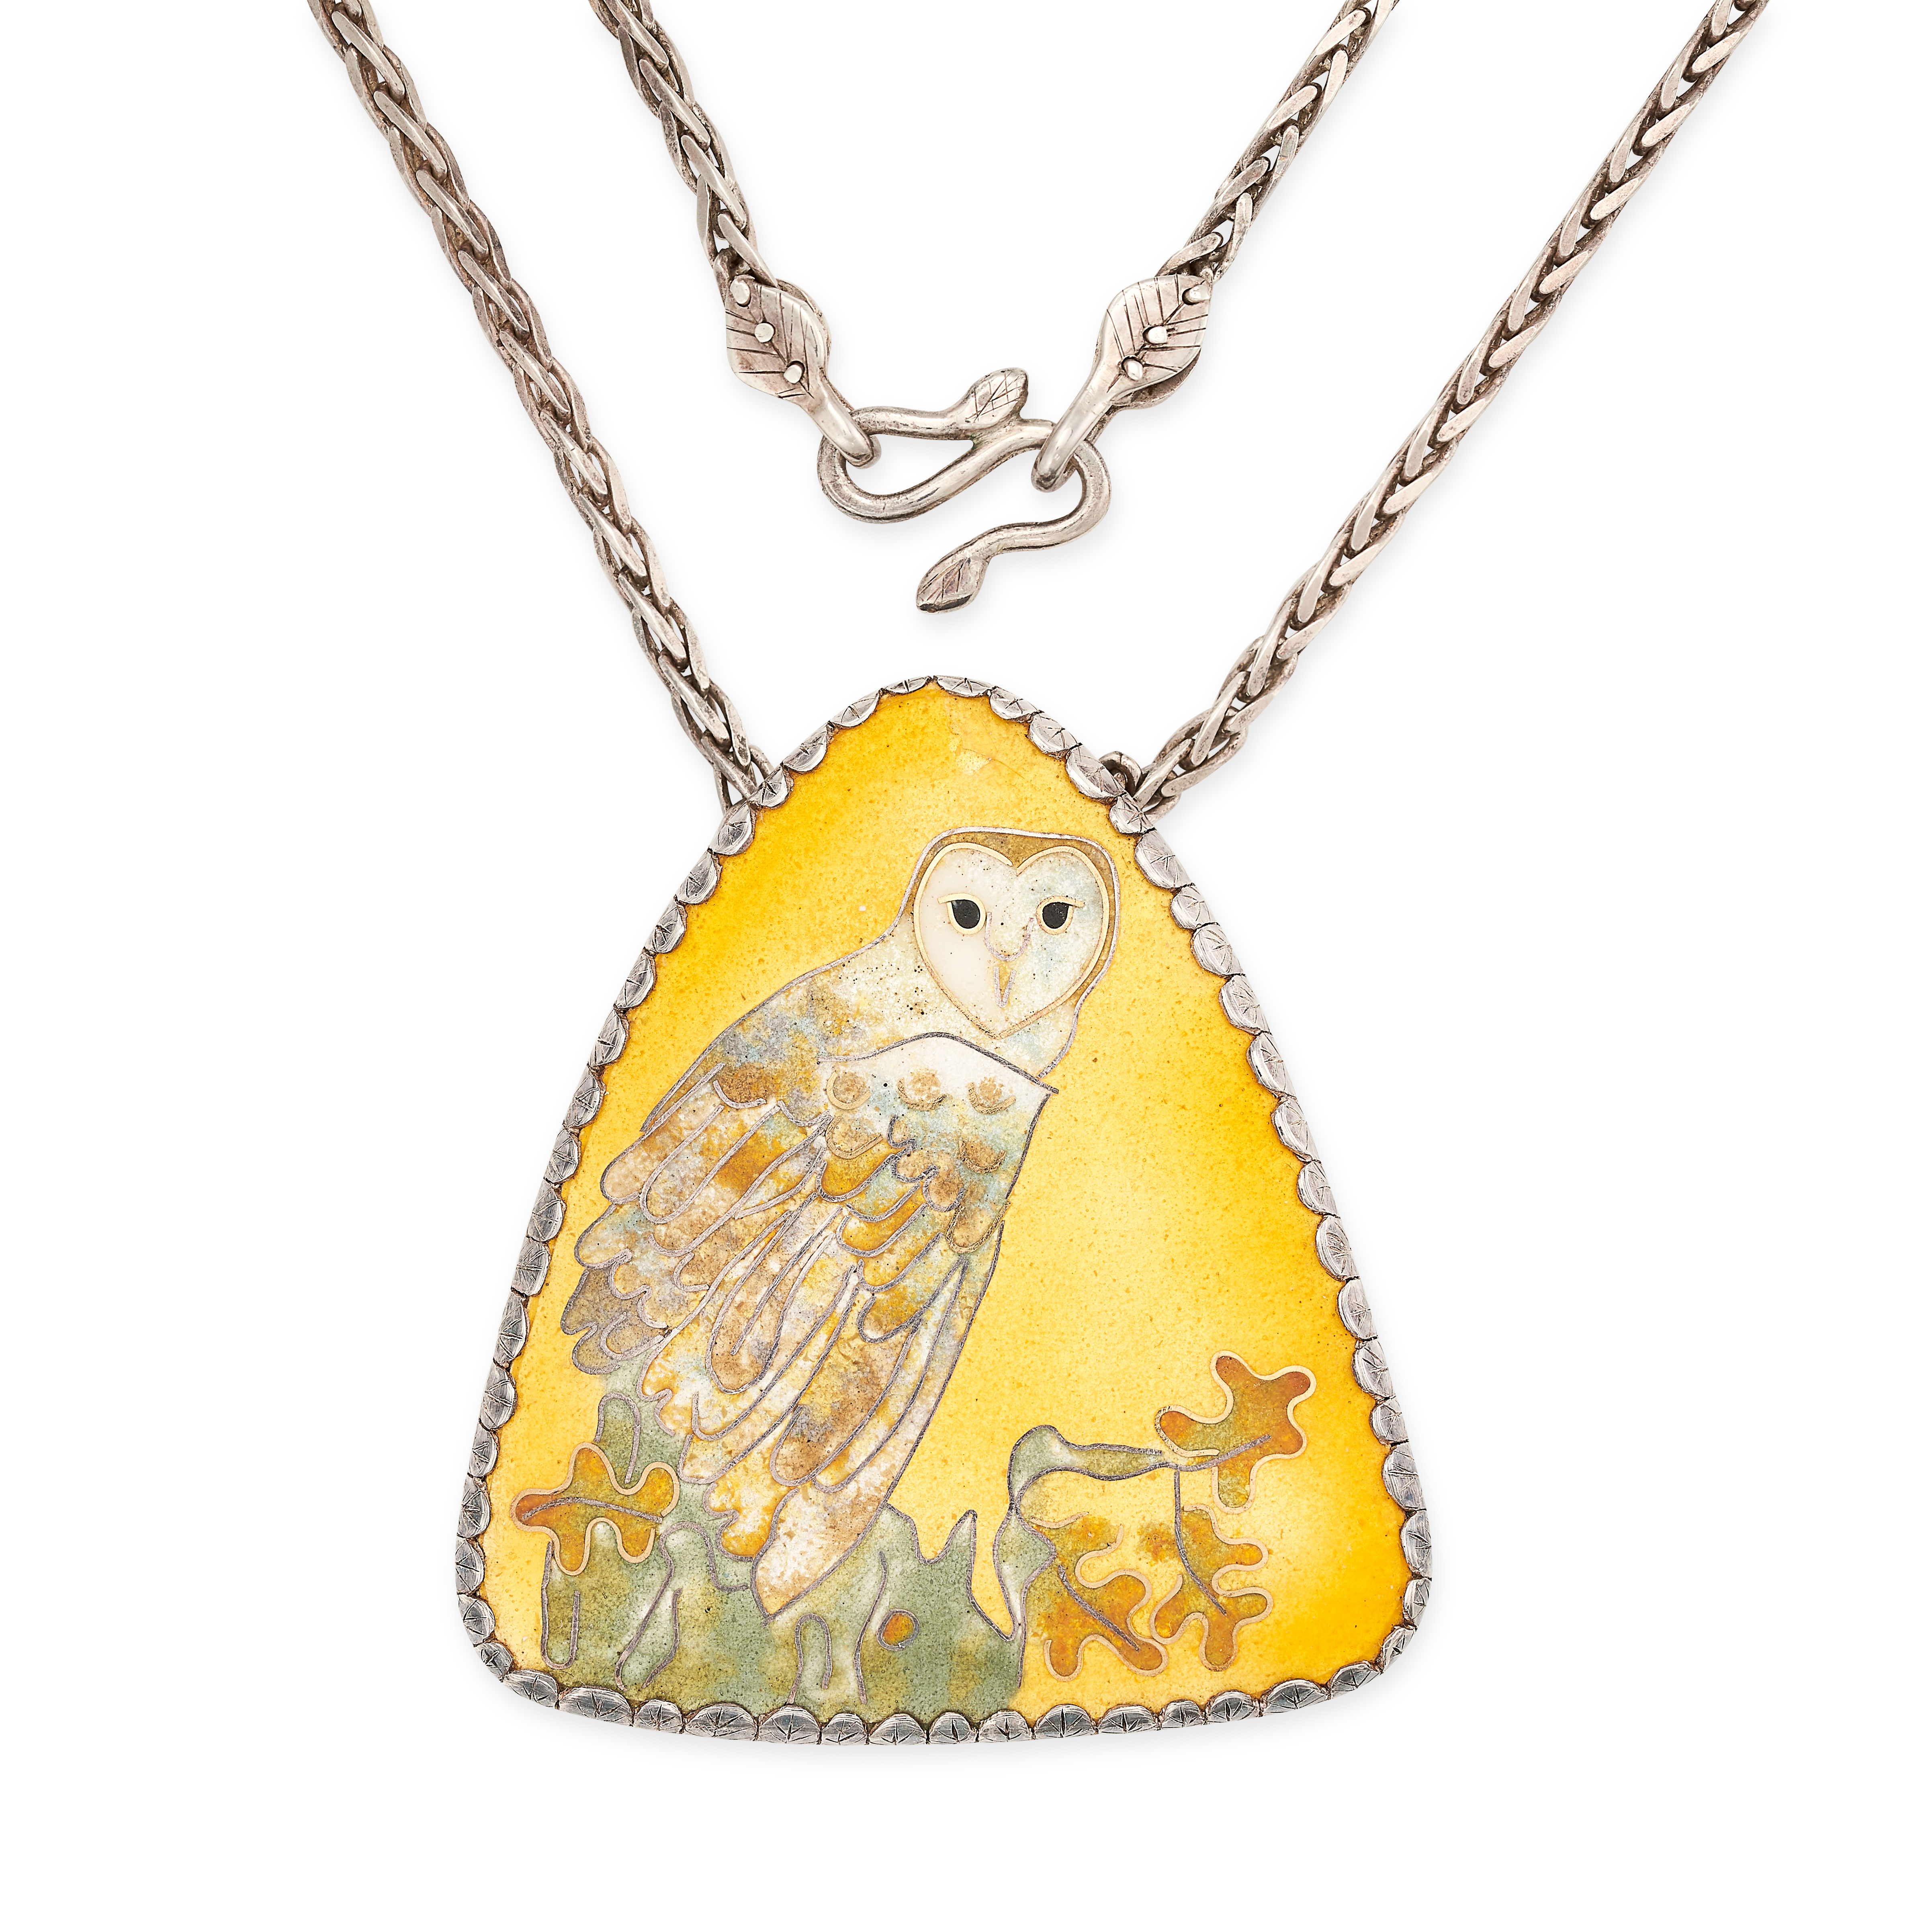 AN ENAMEL OWL PENDANT NECKLACE in silver, designed as a barn owl sitting among foliage in enamel,